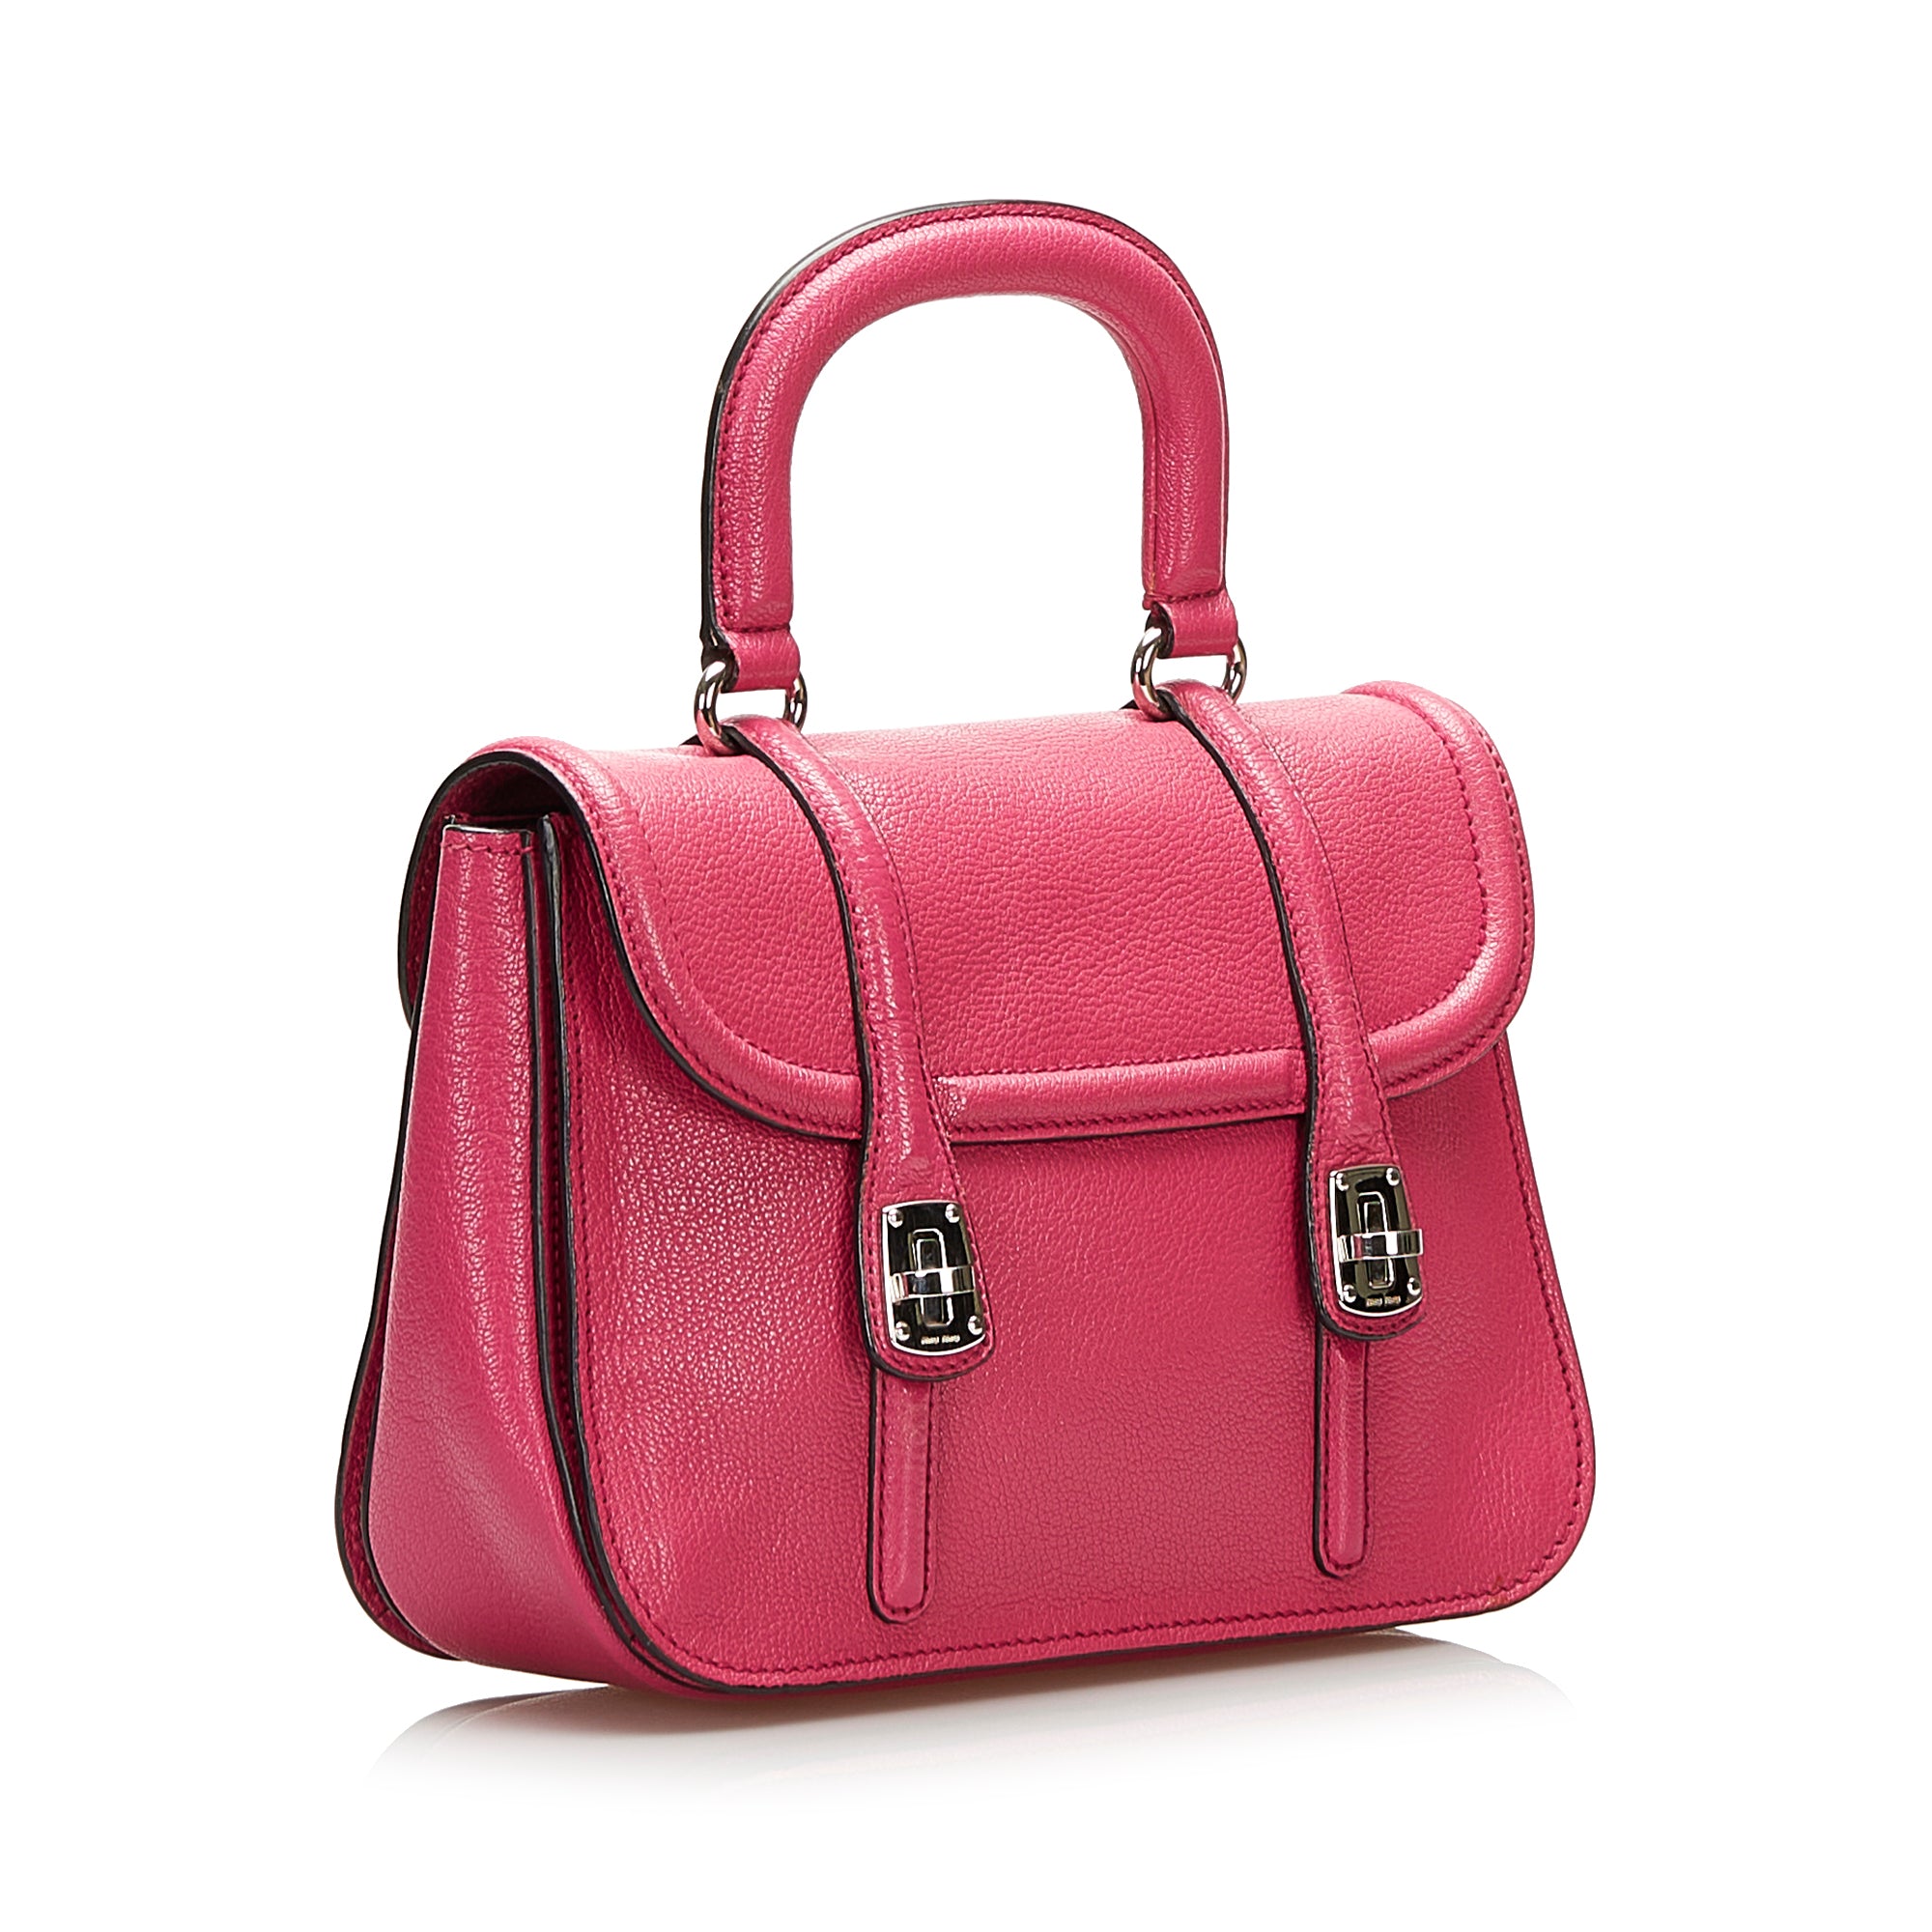 Miu Miu Handbags - Women - 12 products